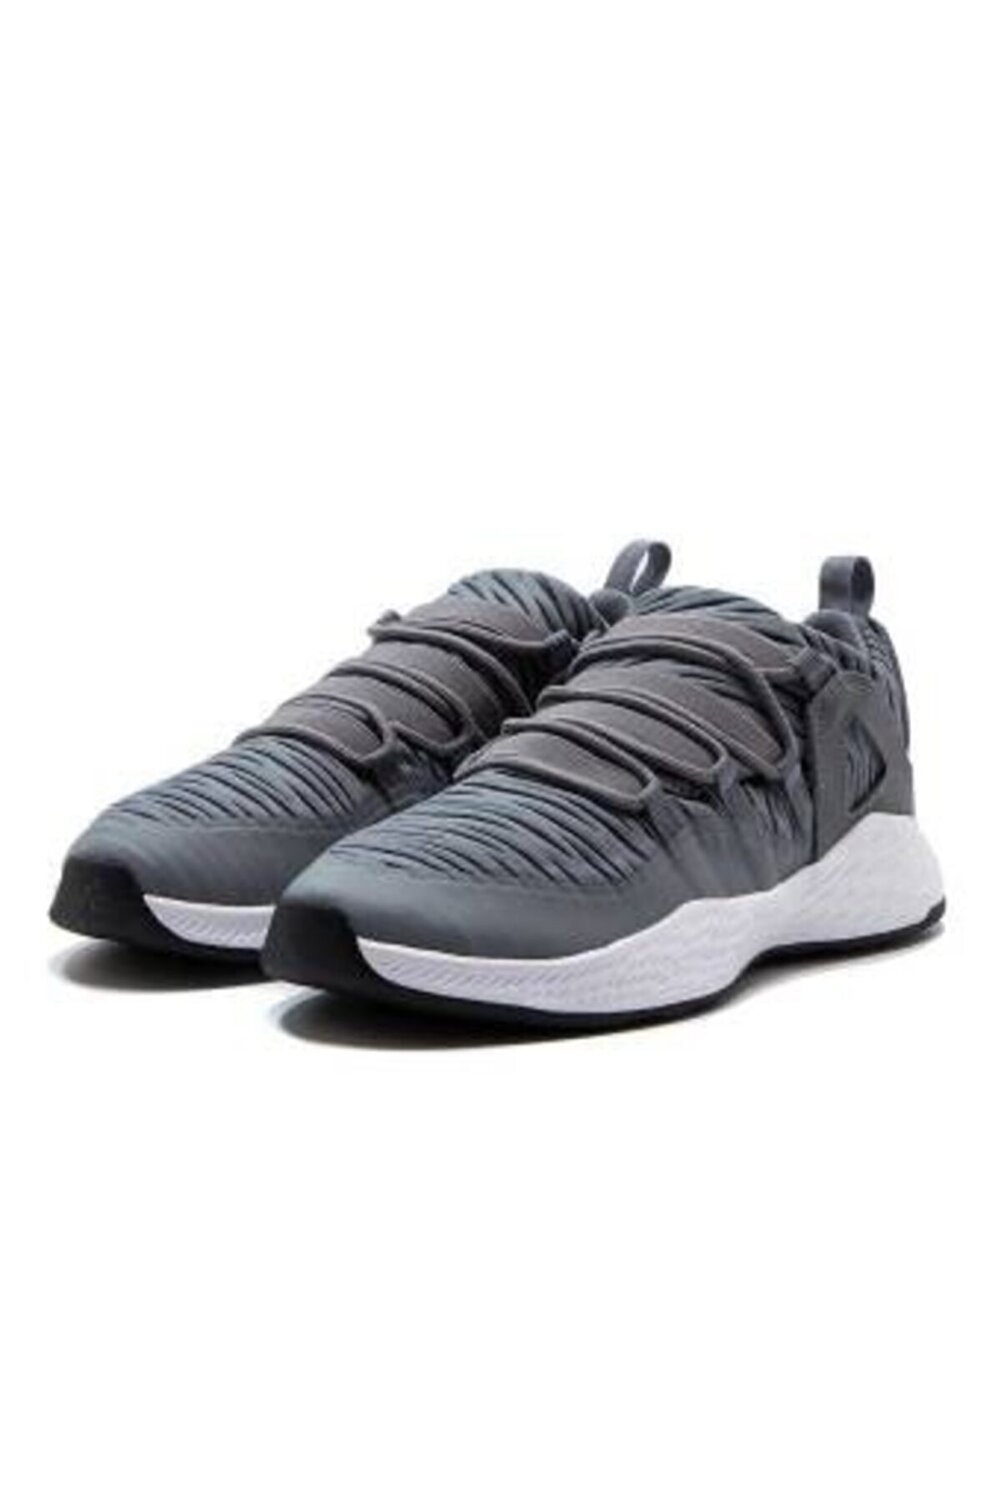 Nike Jordan Formula 23 919725-004